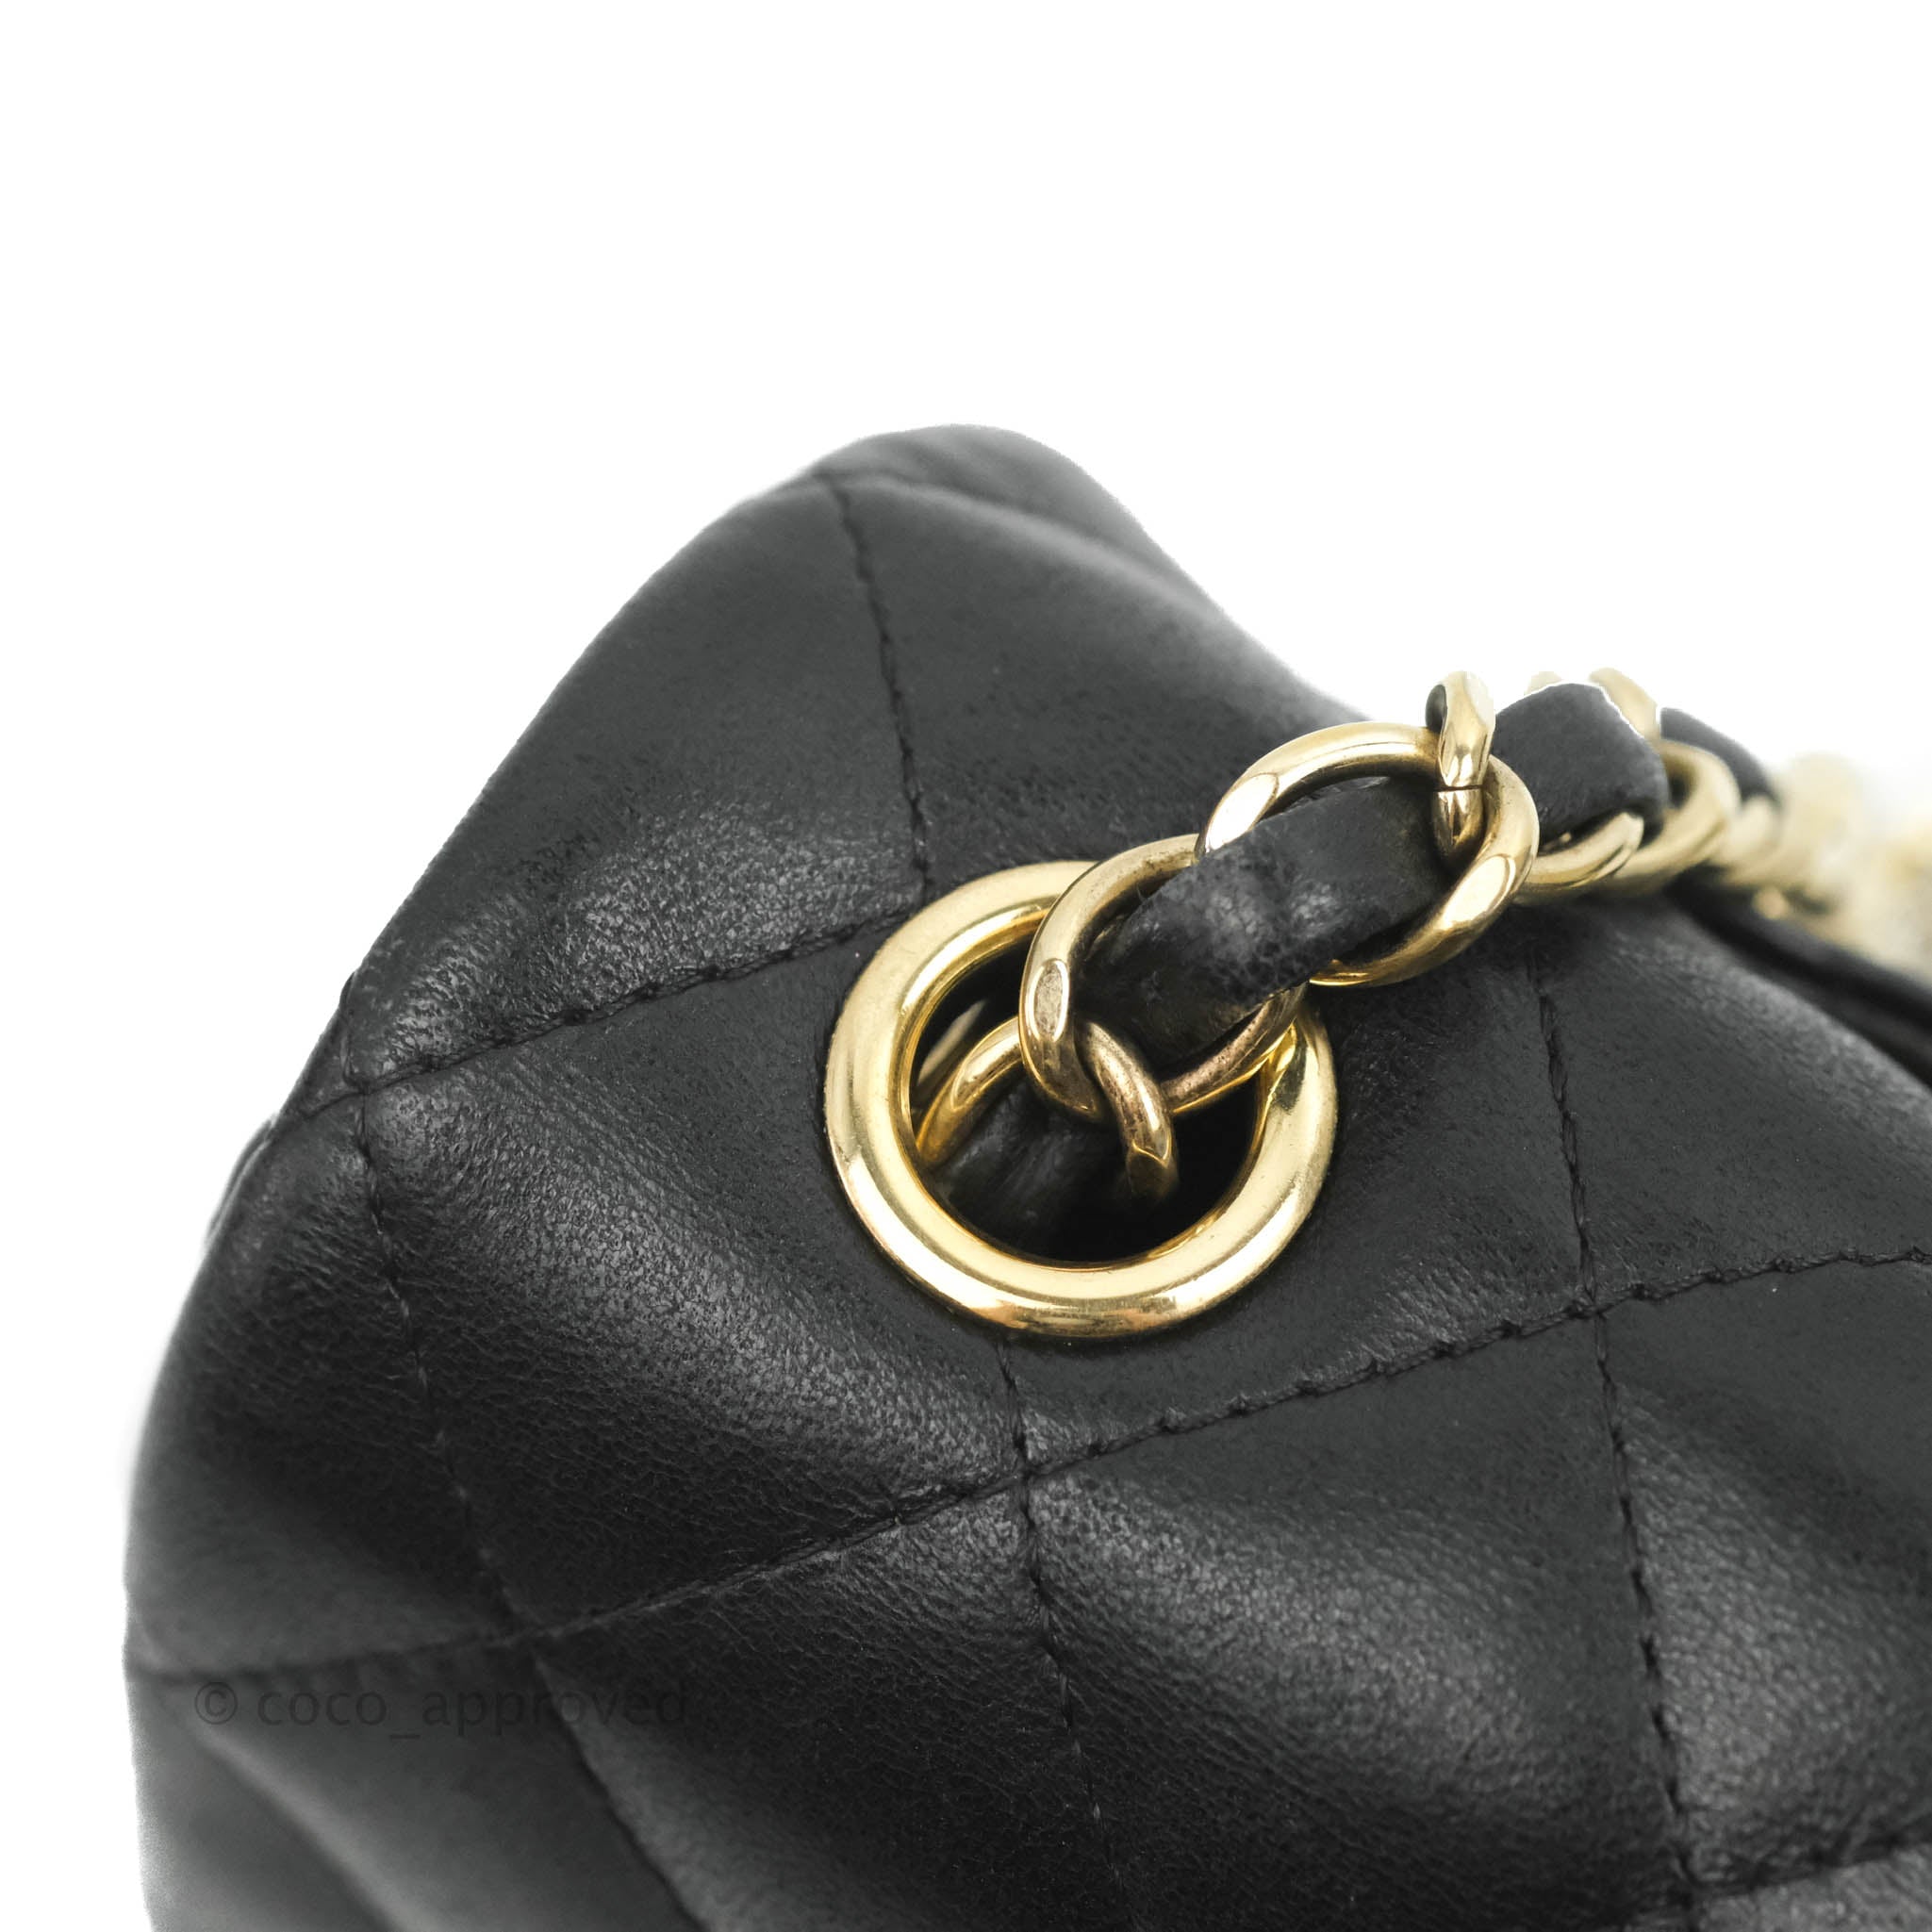 Chanel Chevron Mini Rectangular Flap Black Lambskin Silver Hardware – Coco  Approved Studio